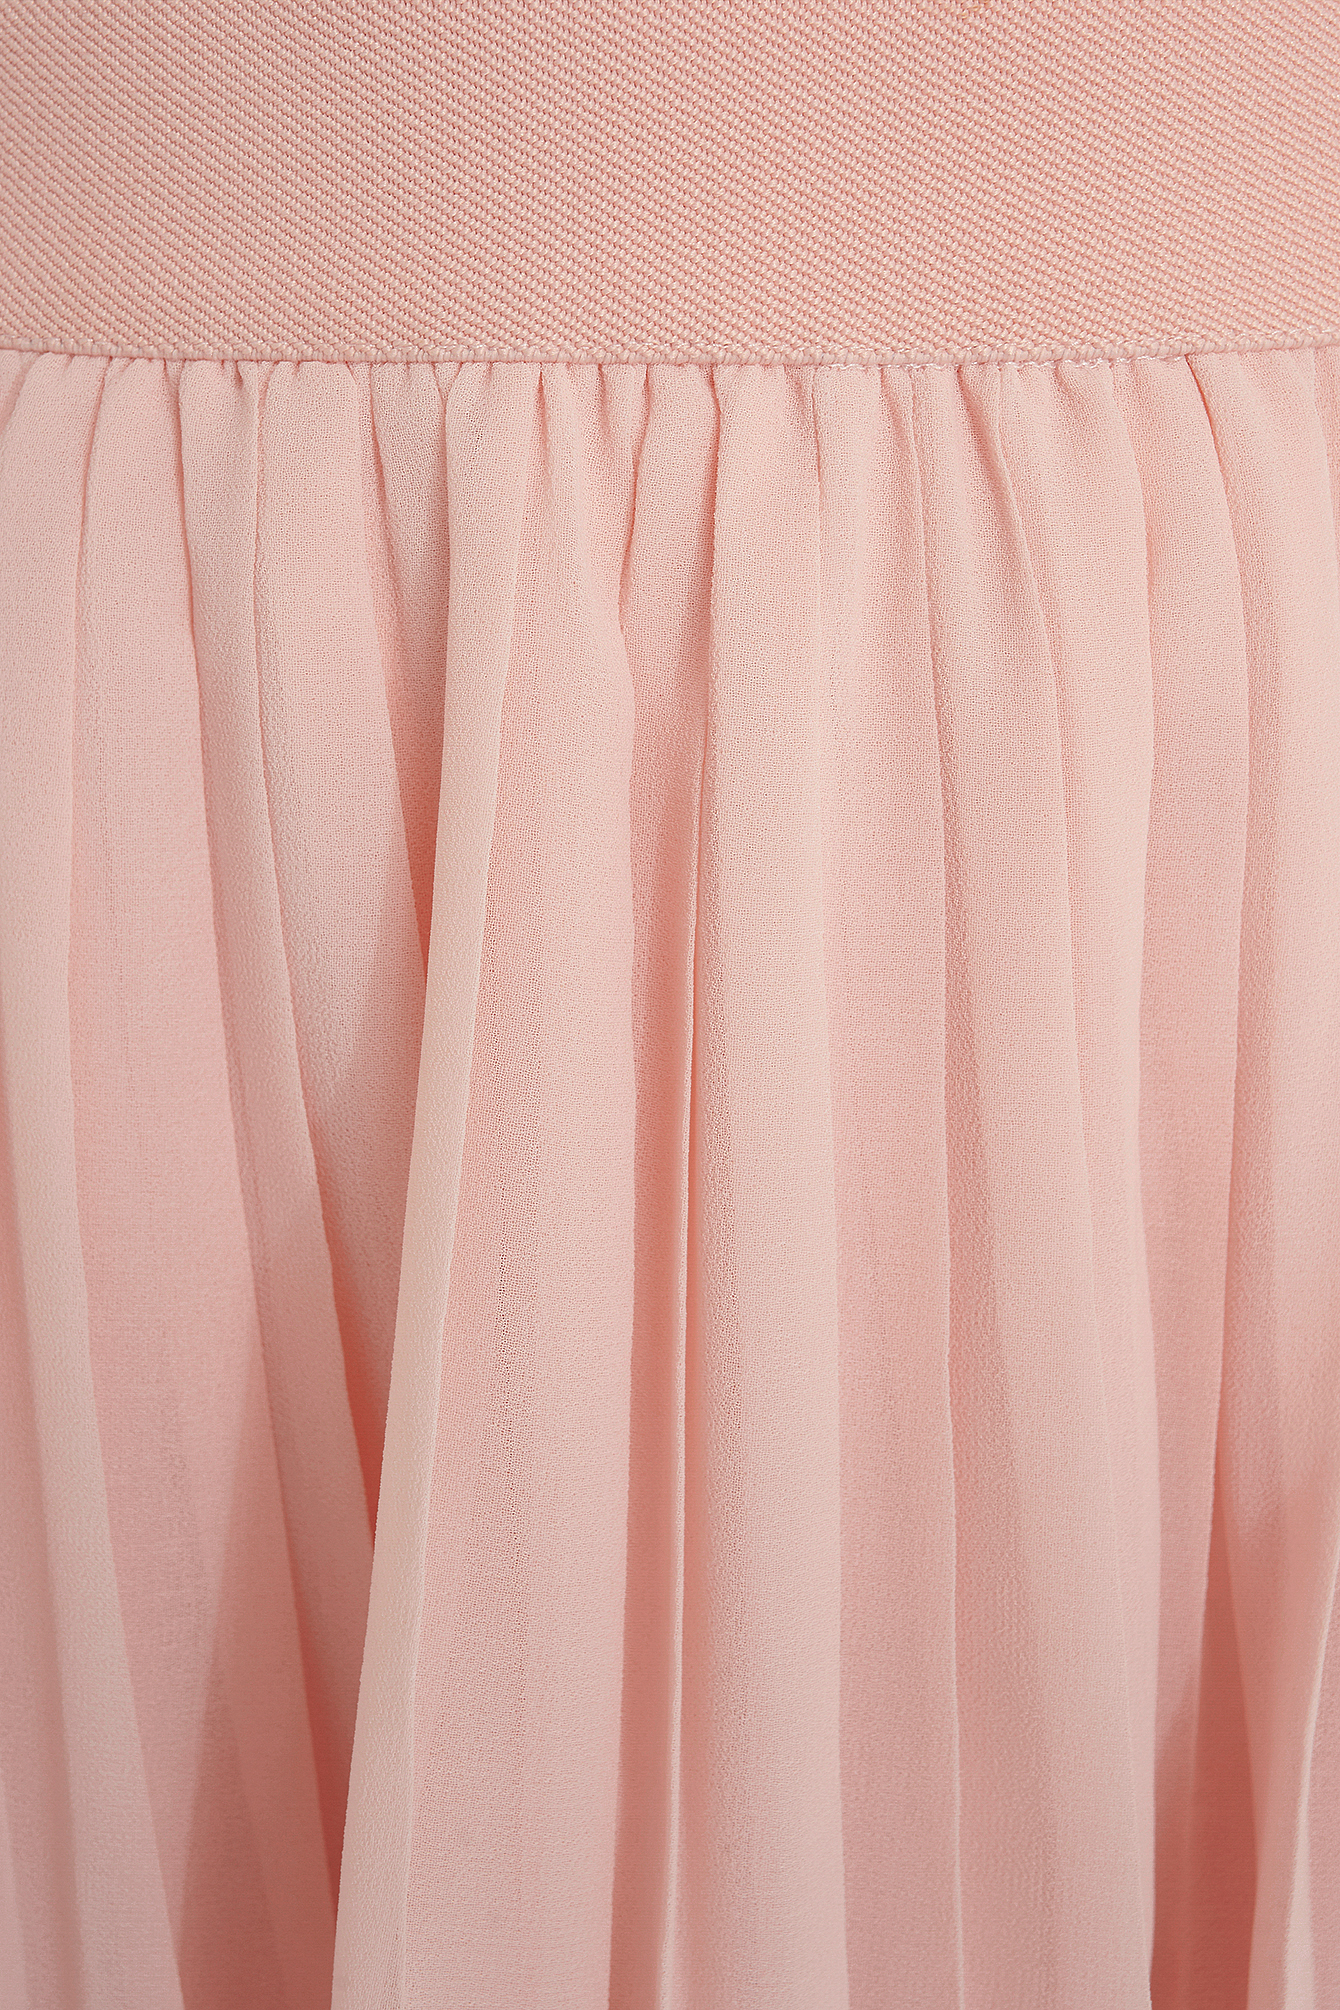 Rose Quartz Mini Pleated Skirt